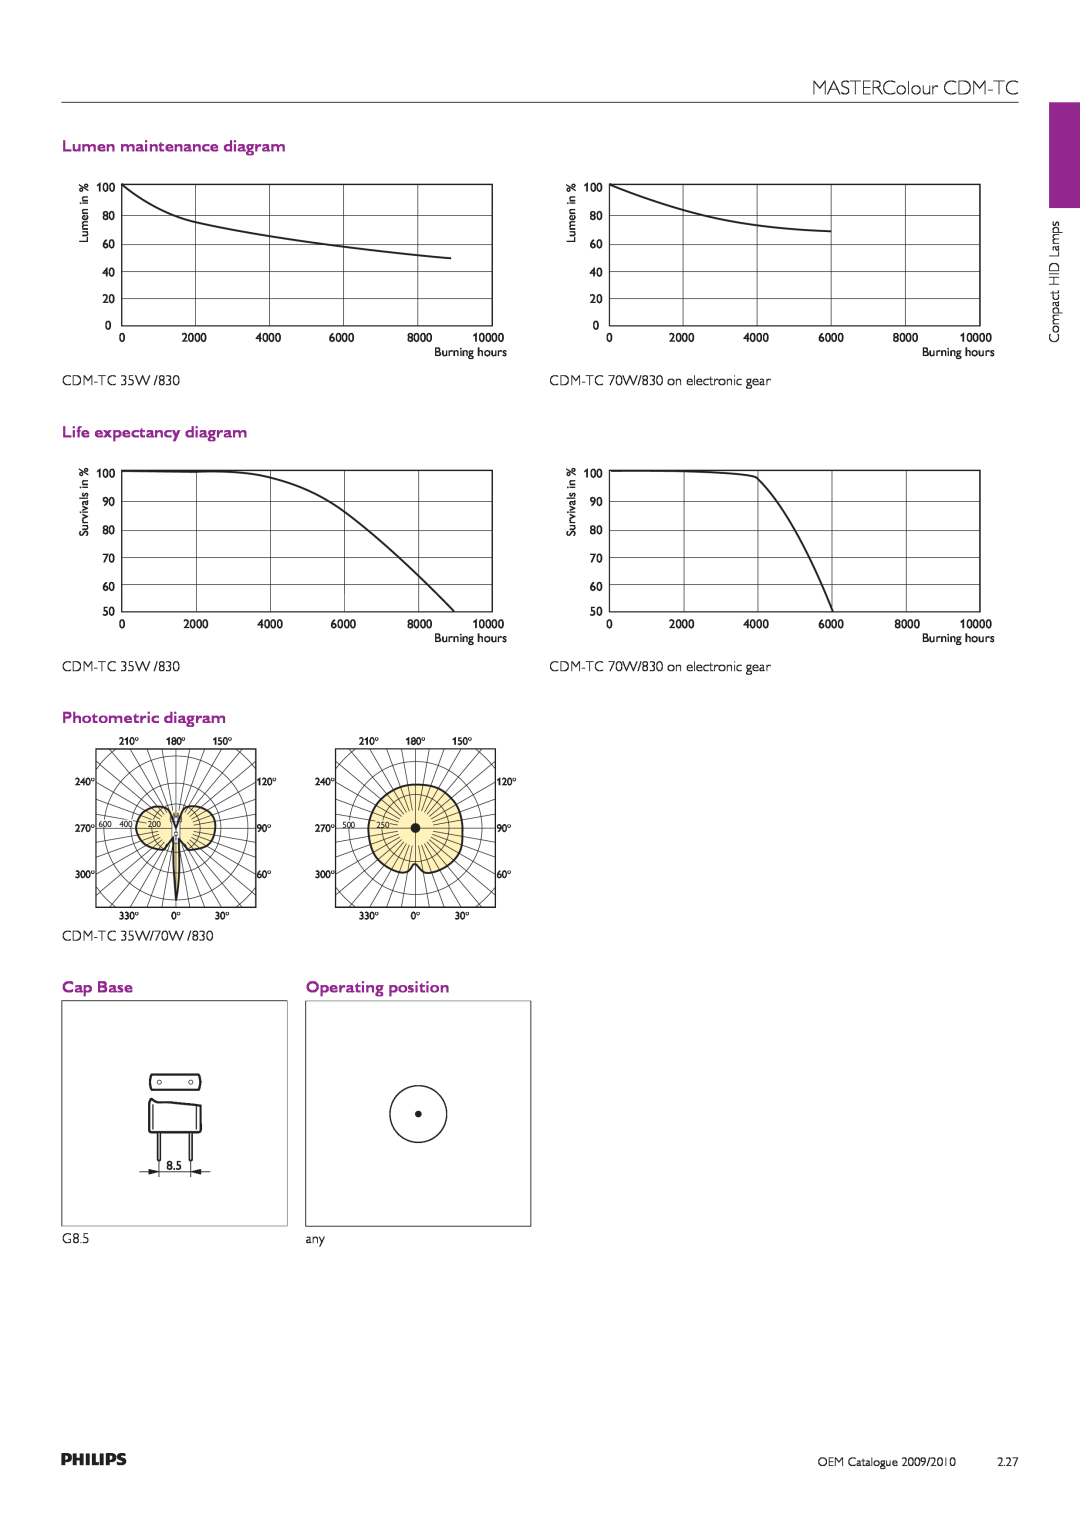 Philips Compact HID Lamp and Gear manual MASTERColour CDM-TC, Lumen maintenance diagram, Life expectancy diagram, Cap Base 